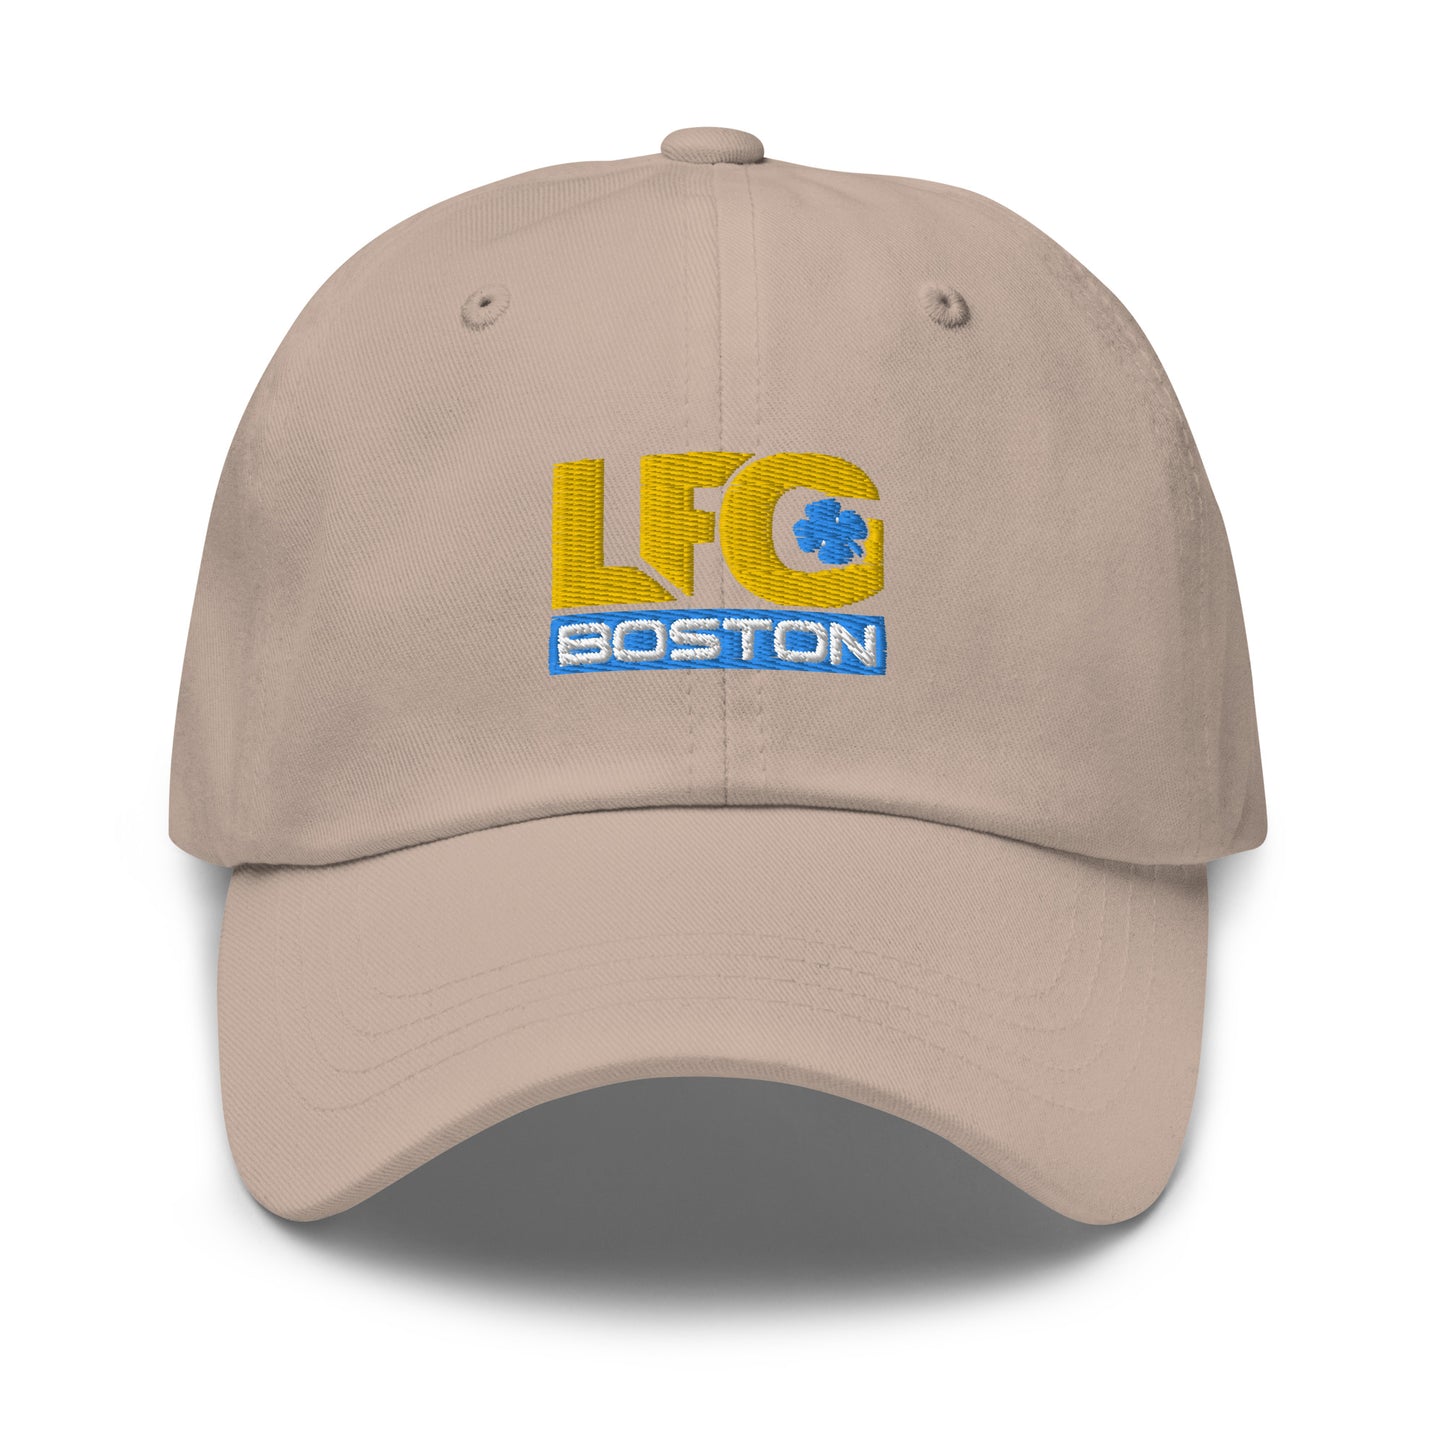 LFG Boston hat